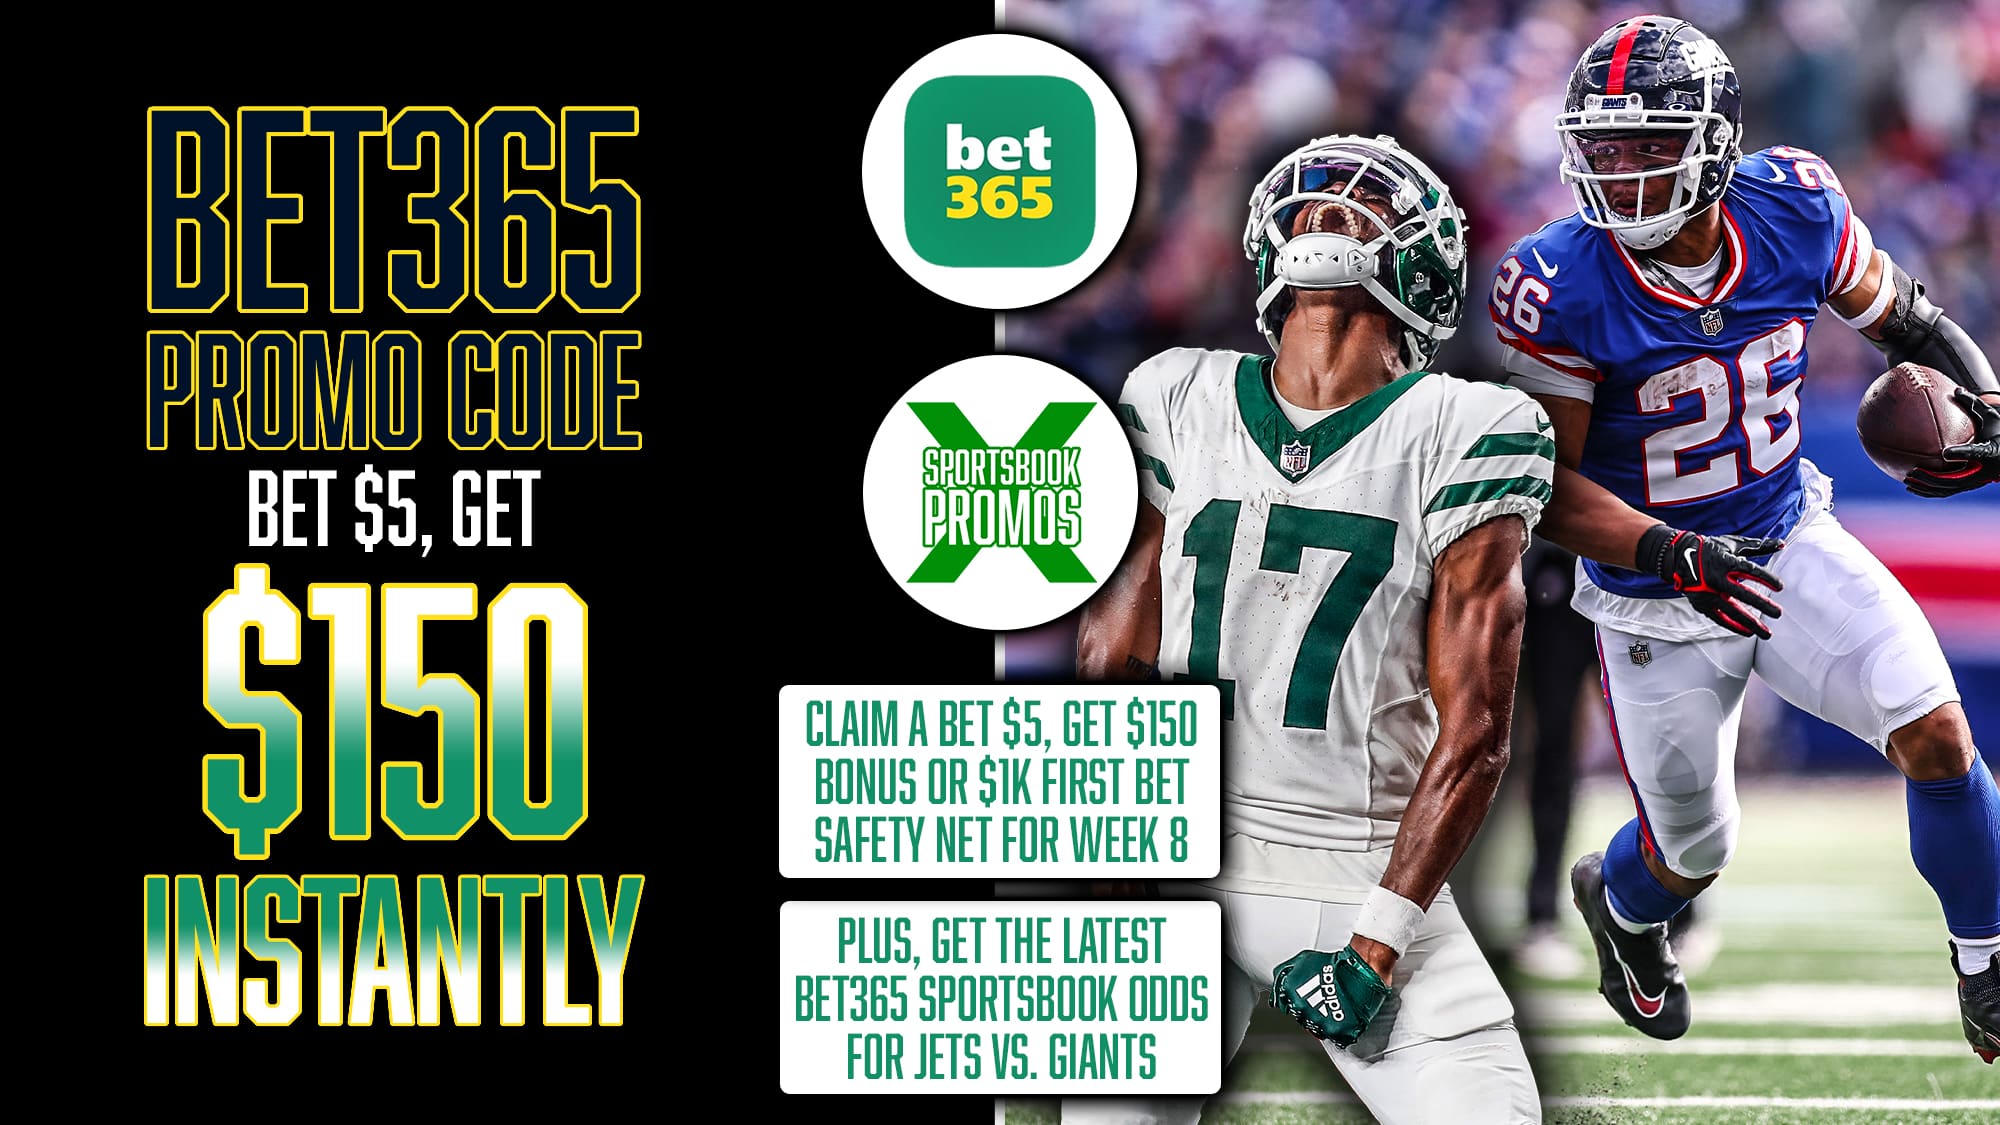 bet365 Promo Code NFL, Get $150 Bonus, Week 8, New York Jets vs. New York Giants